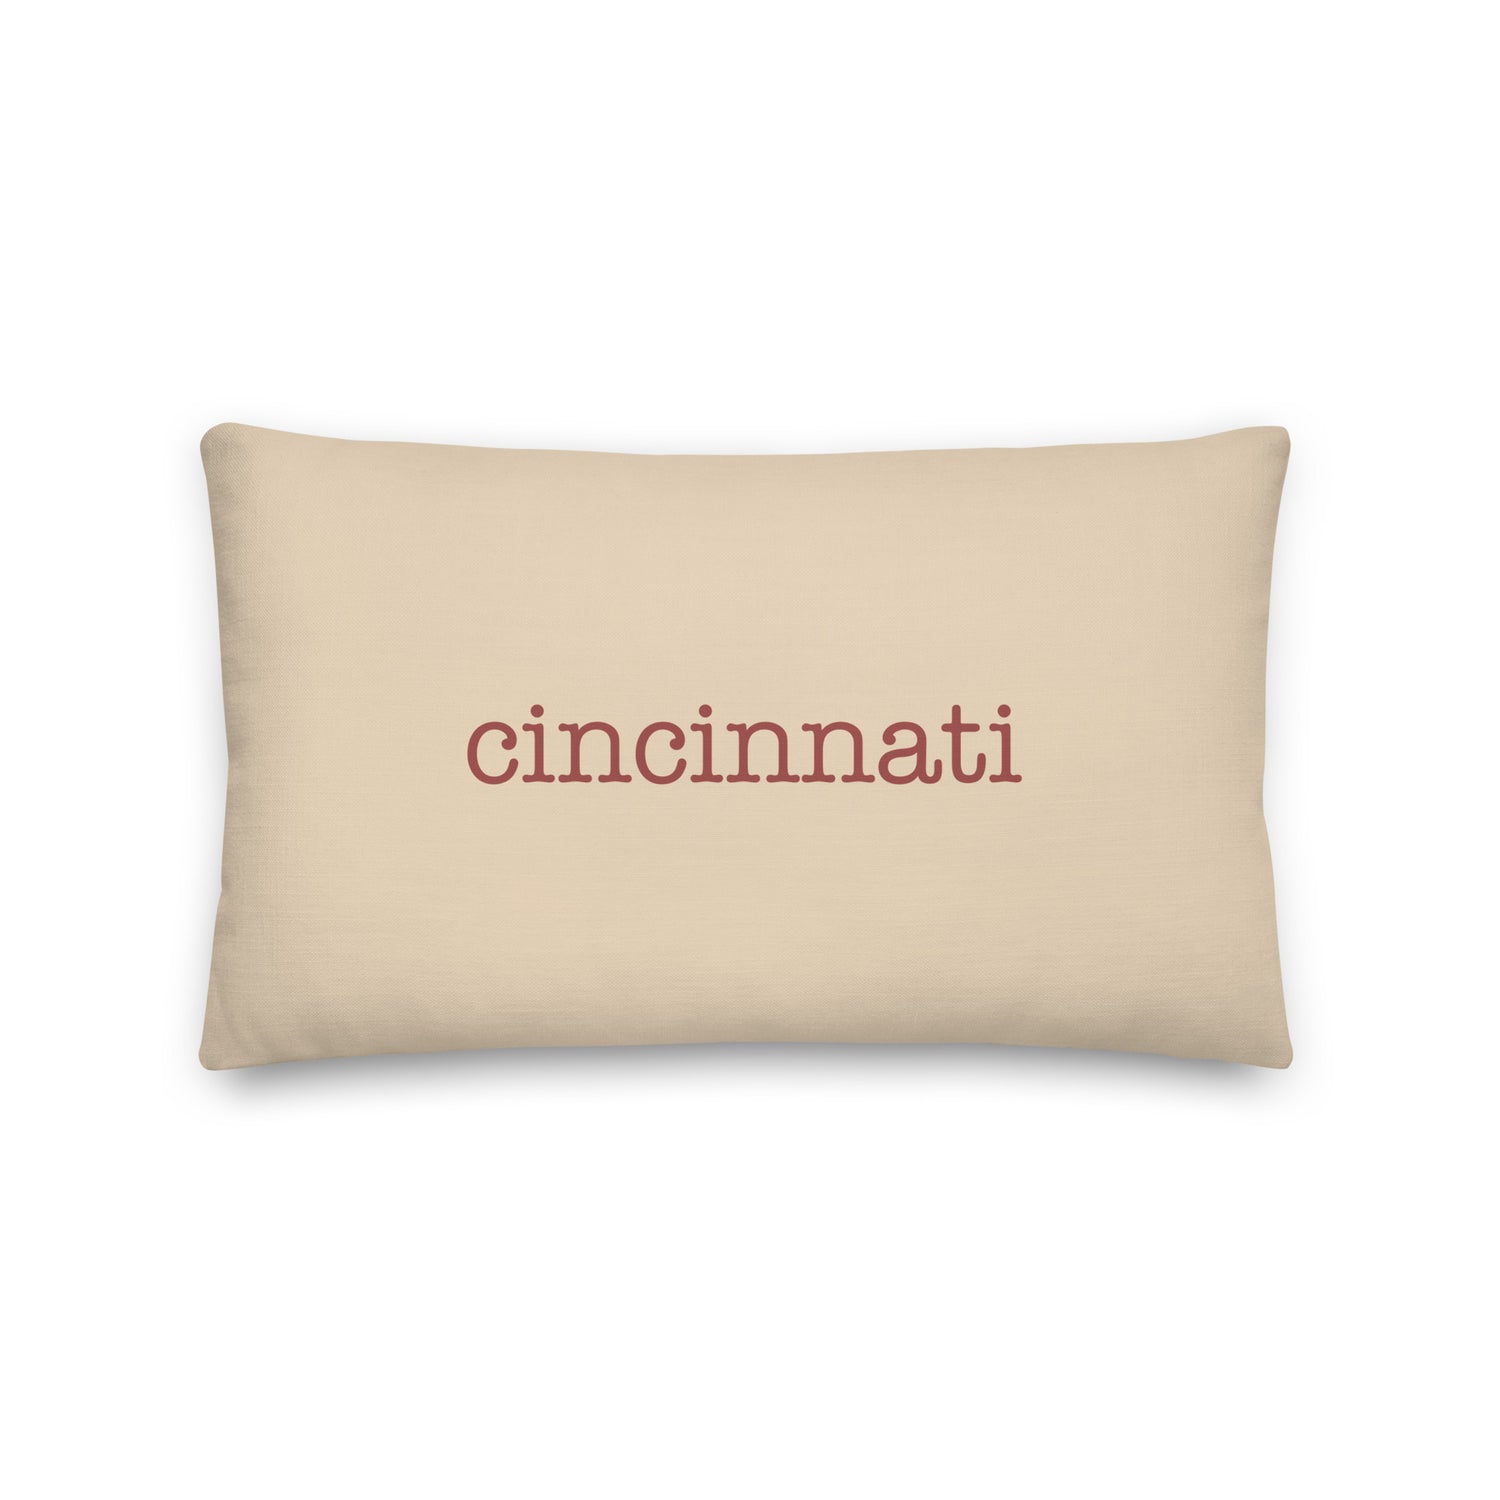 Cincinnati Ohio Pillows and Blankets • CVG Airport Code